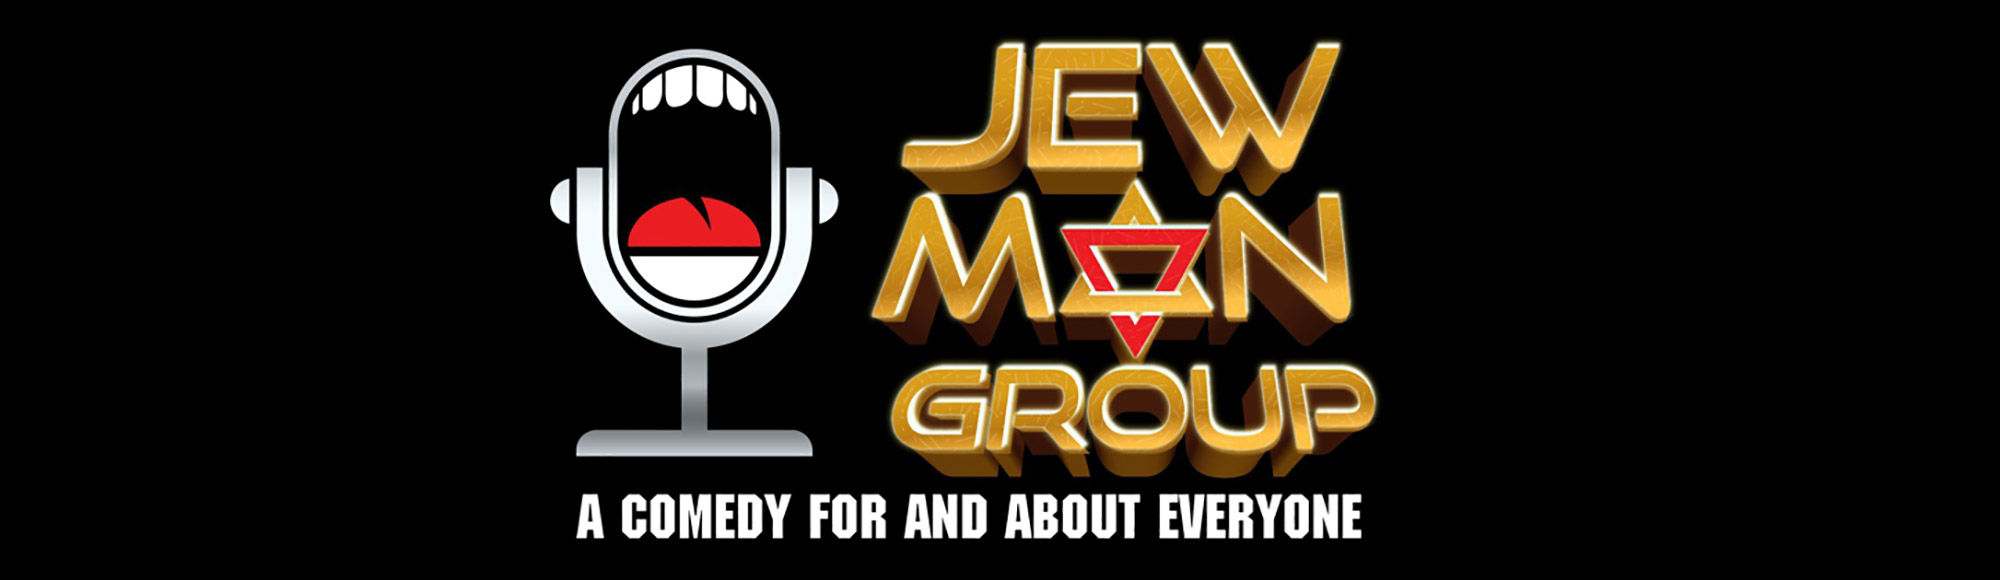 Jew Man Group show